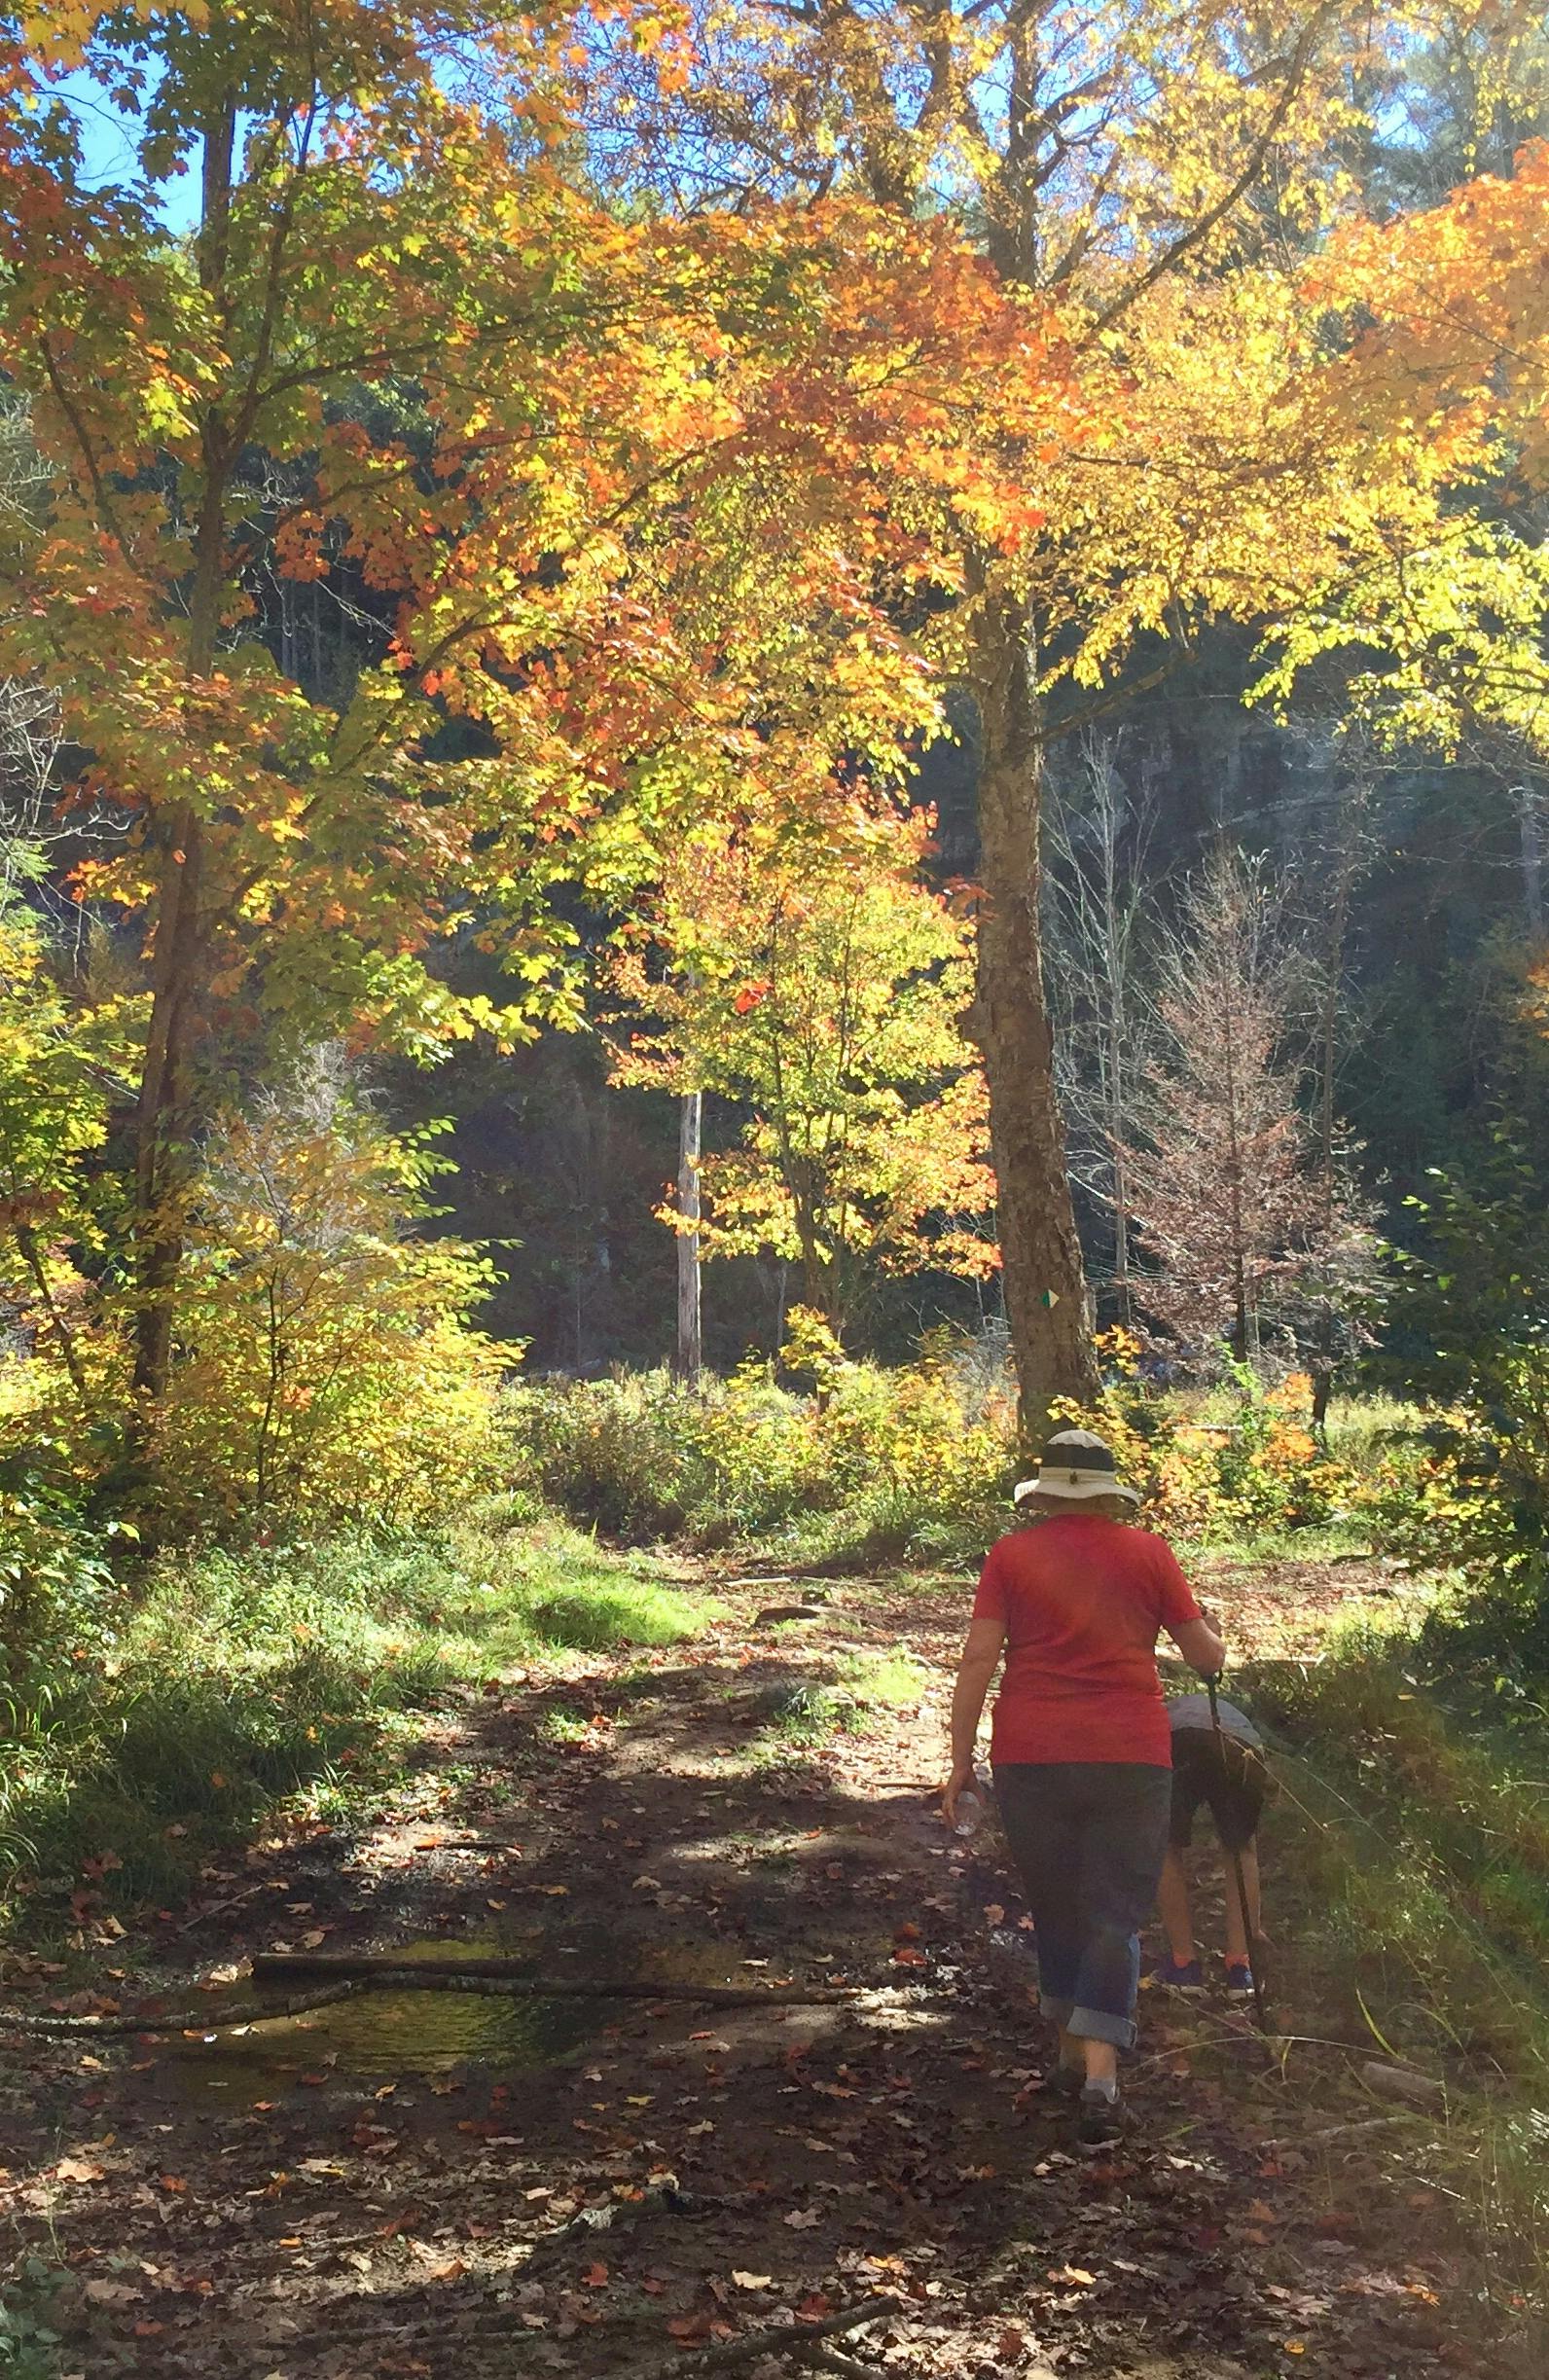 Free stock photo of Autumn Sunday walk, fall colours, red shirt